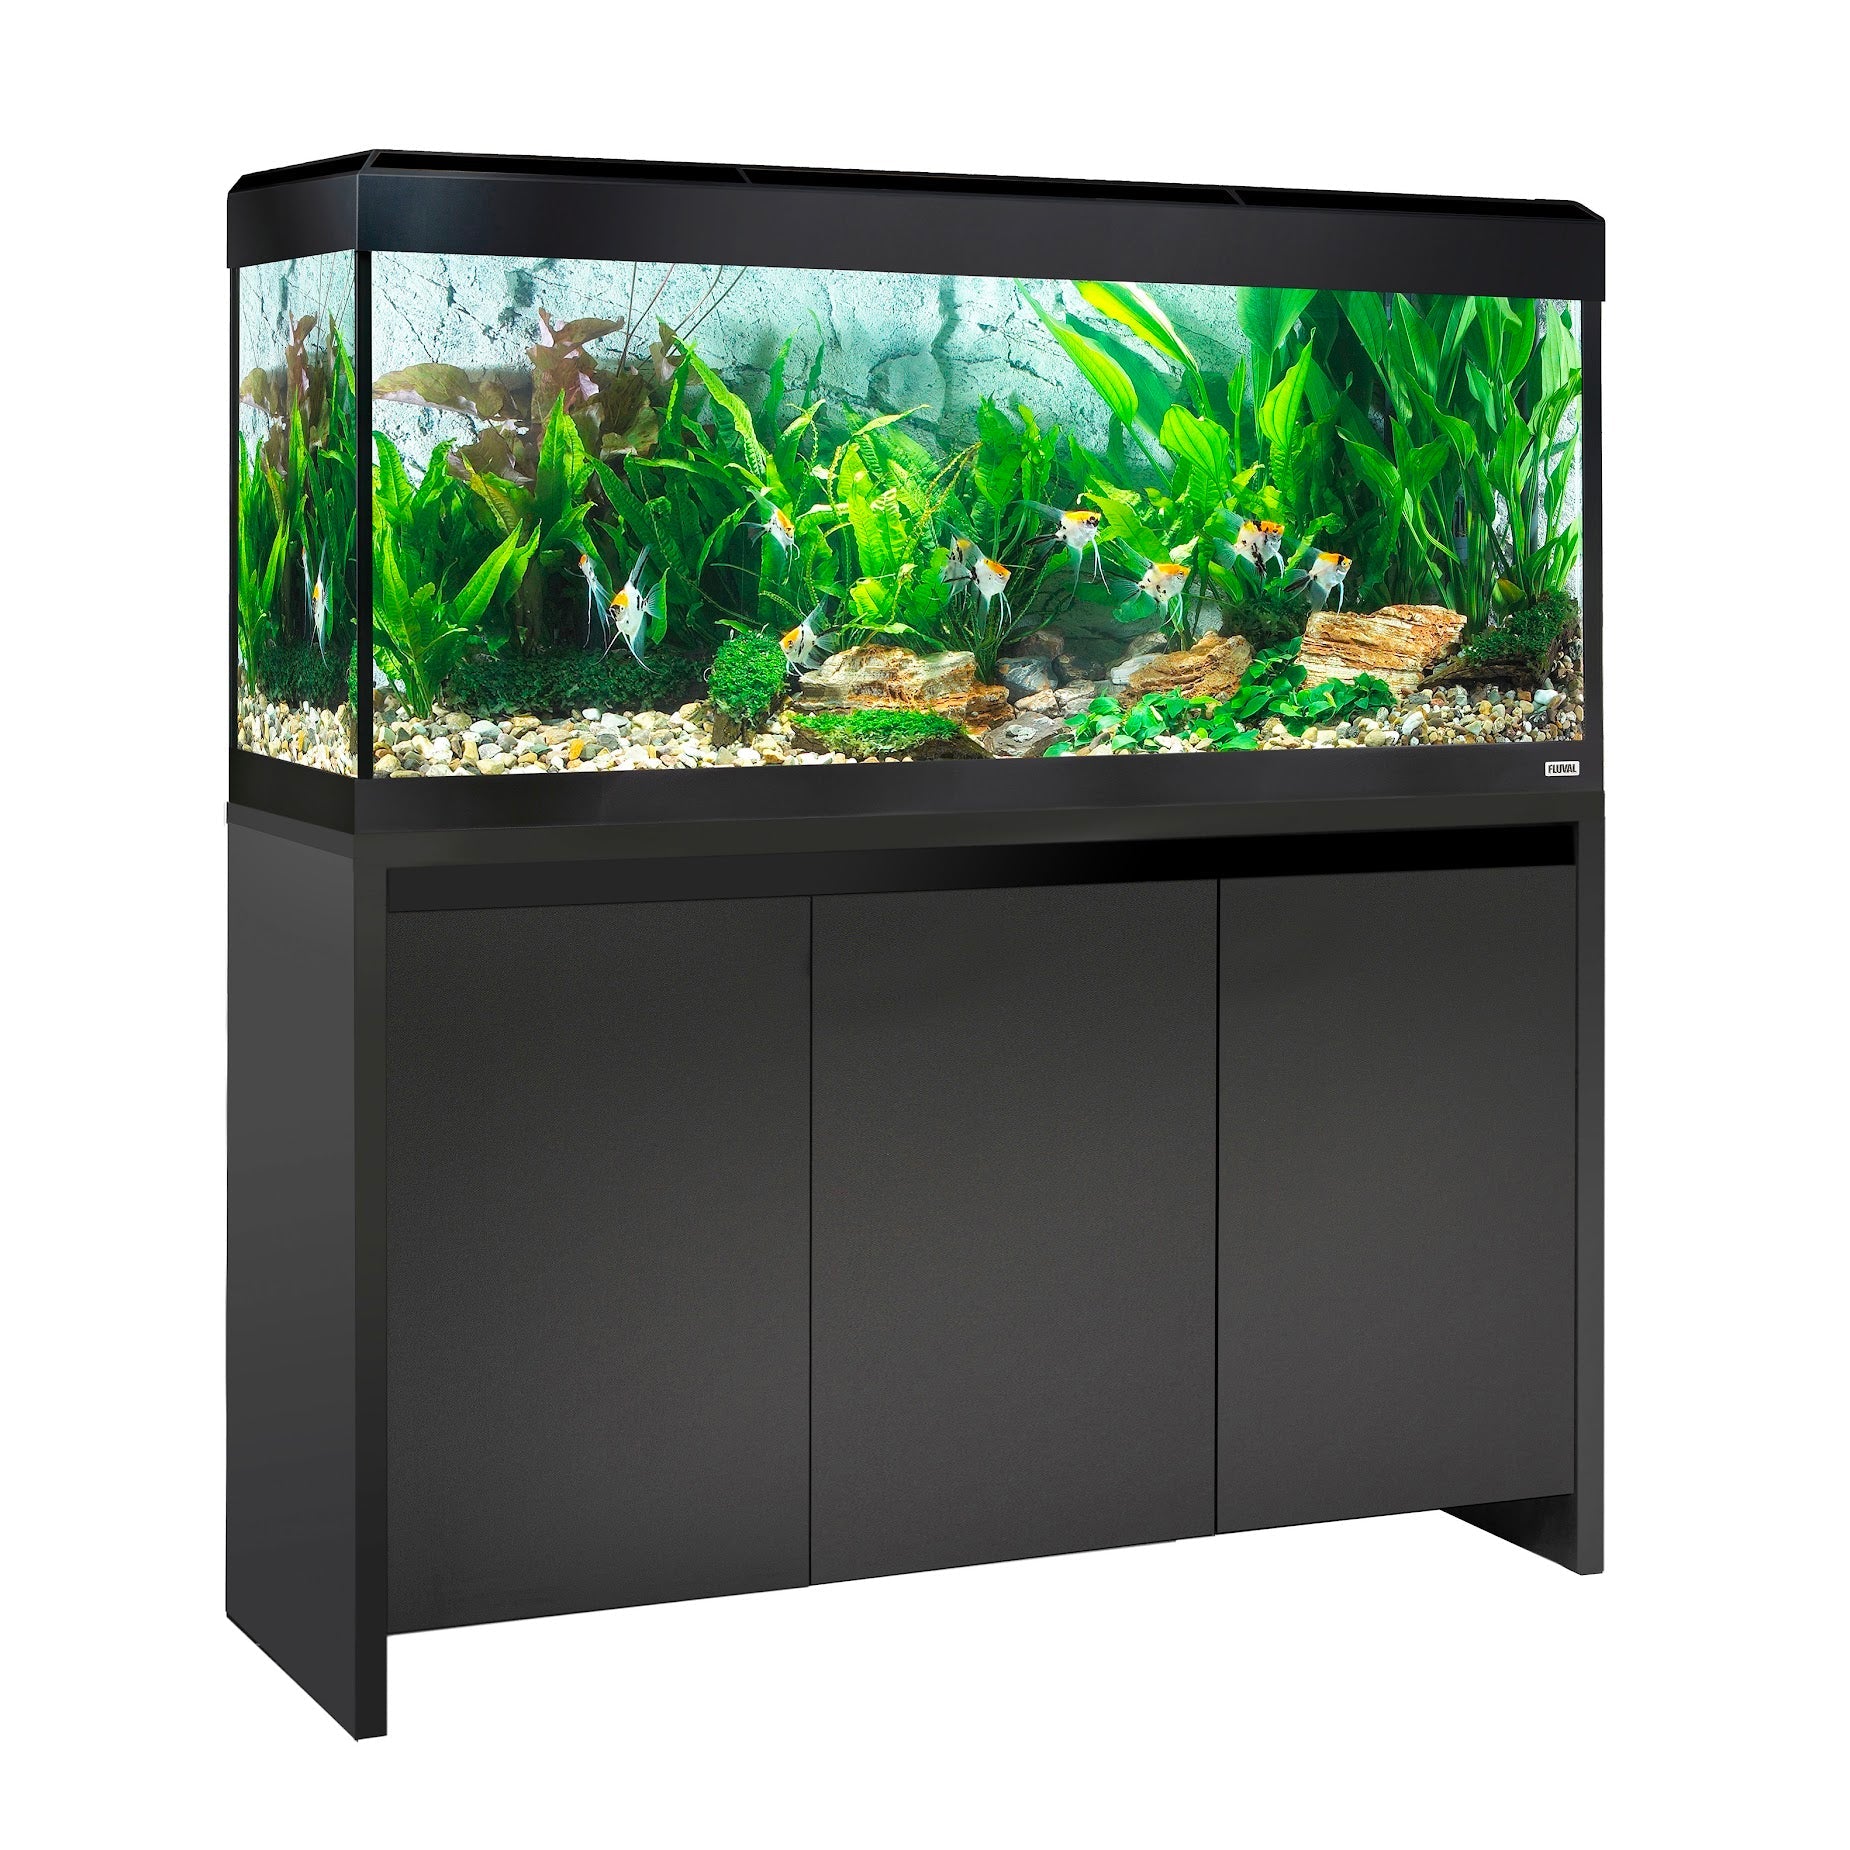 Fluval Roma Bluetooth LED 240 Aquarium and Cabinet - Black - Charterhouse Aquatics